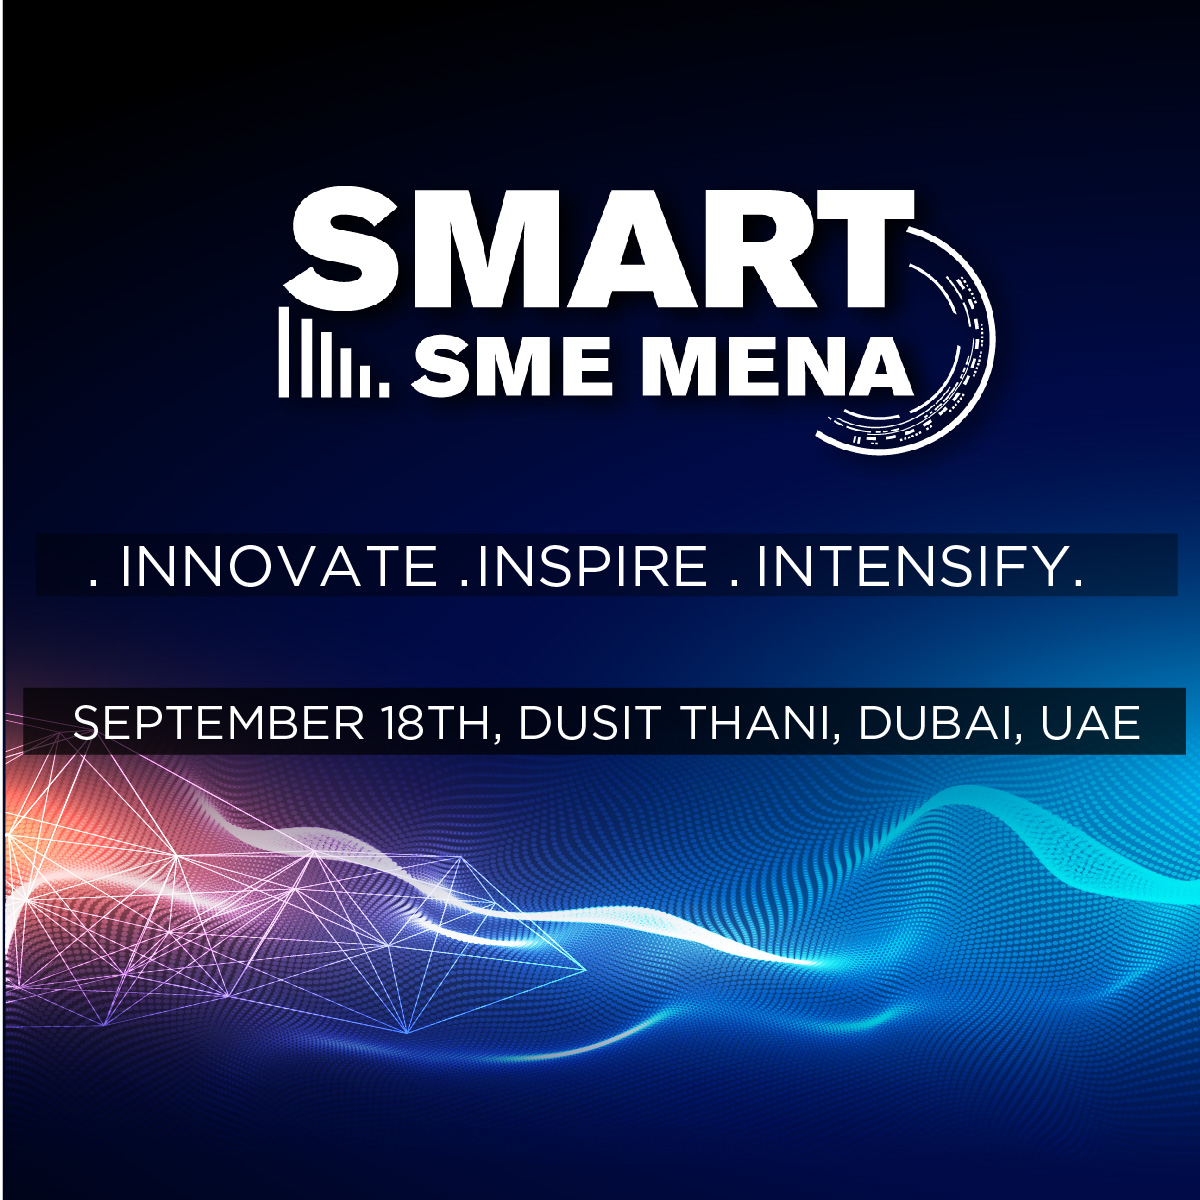 SMART SME MENA 2019, Dubai, United Arab Emirates